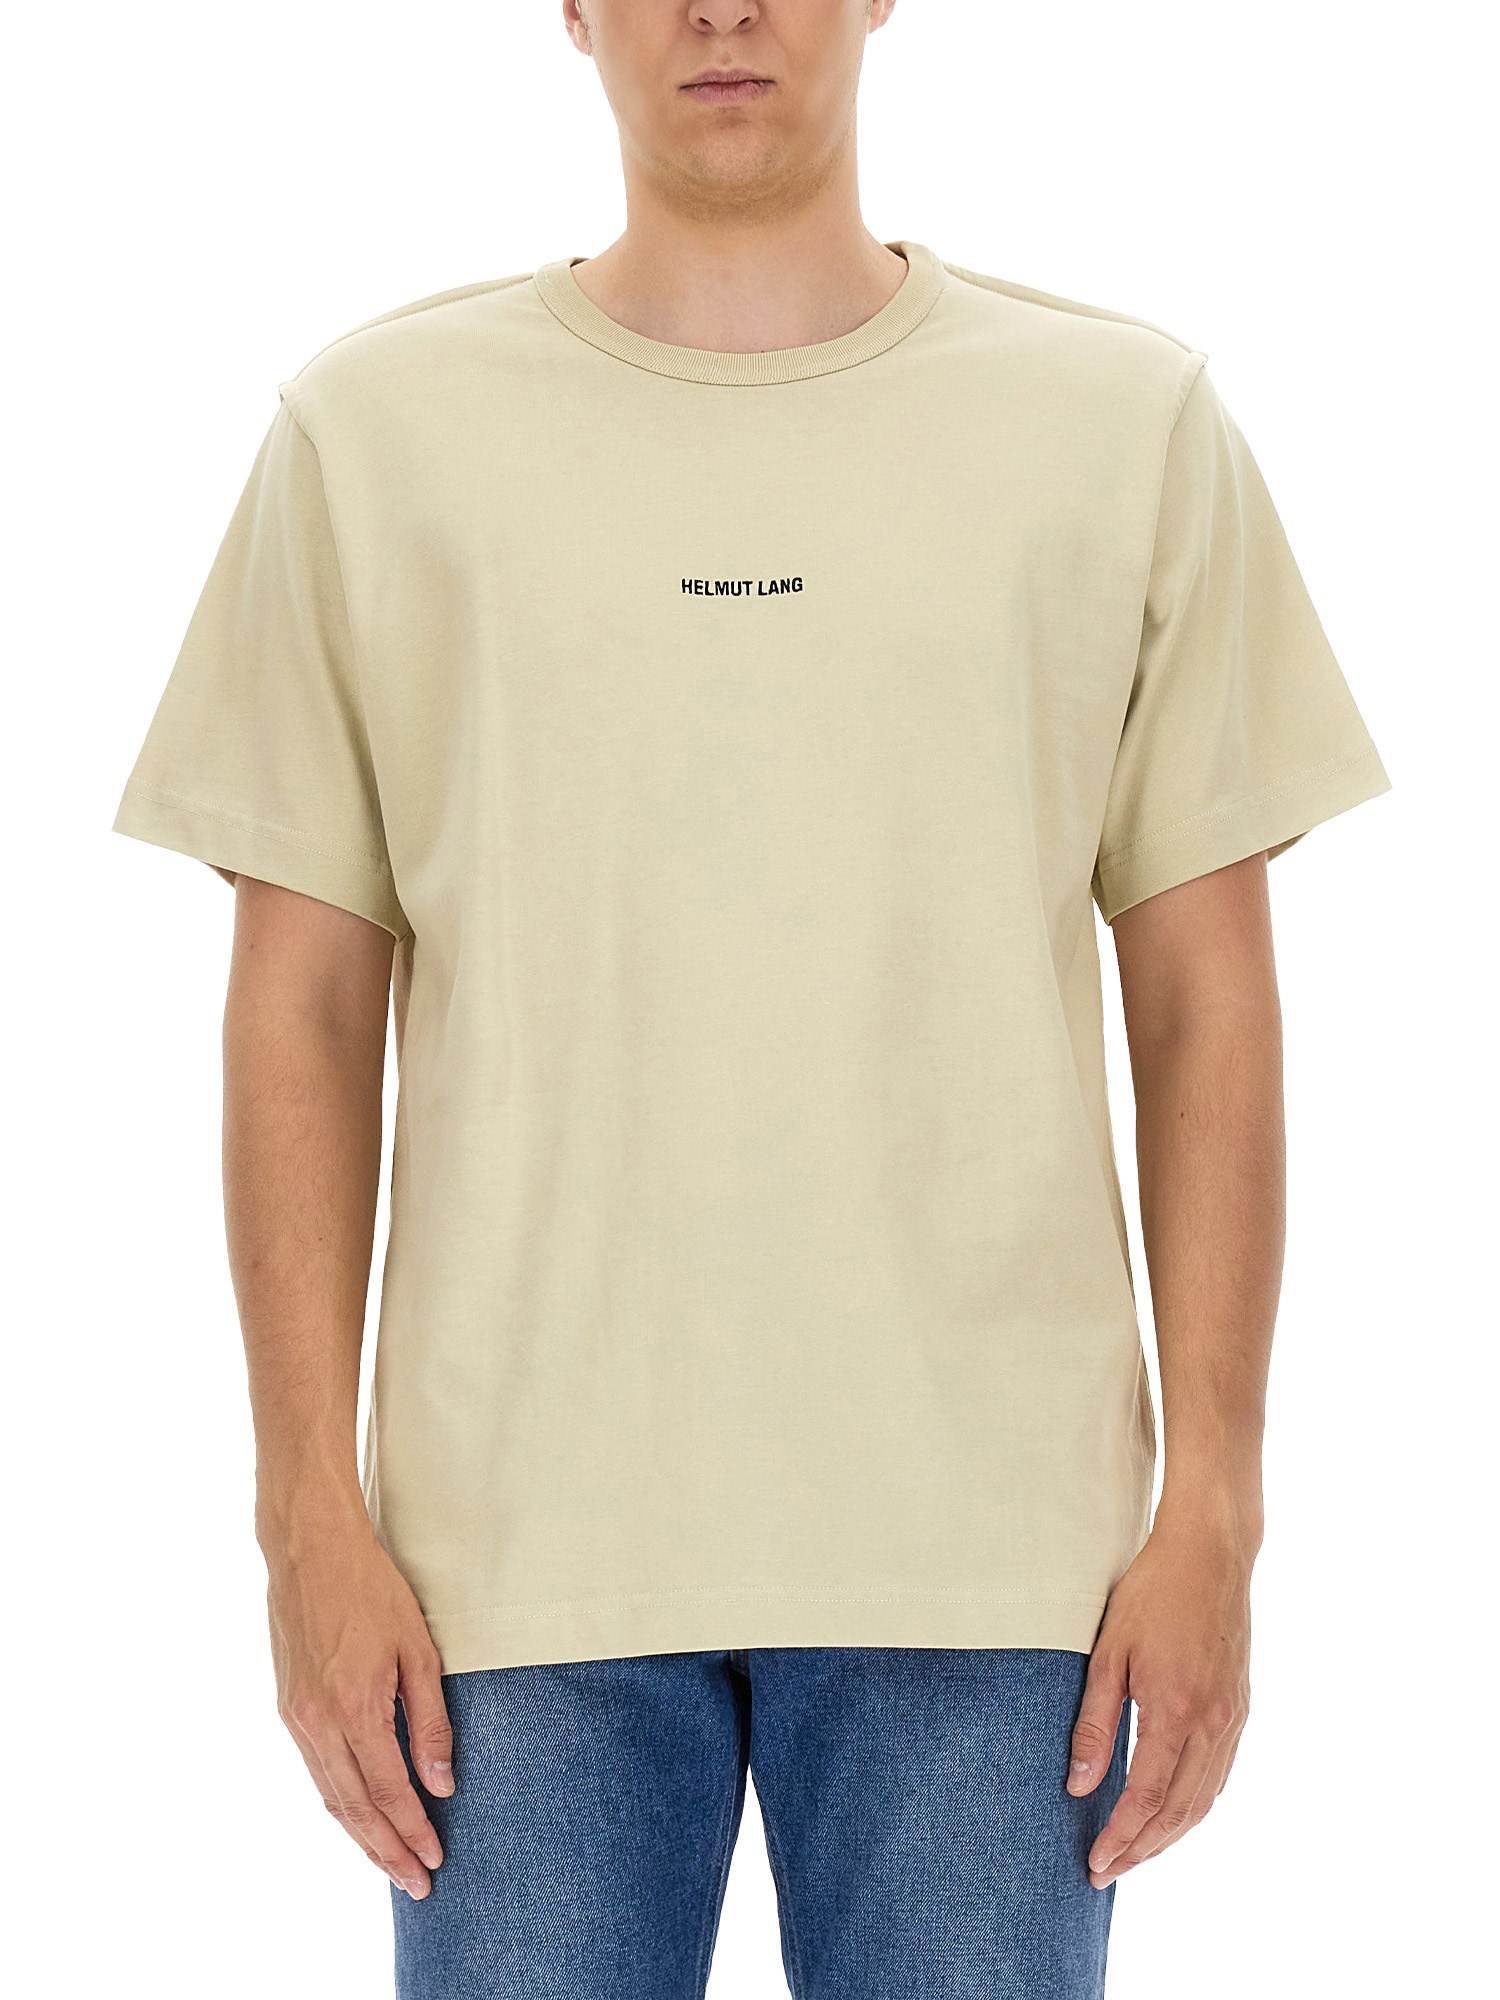 helmut lang logo print t-shirt